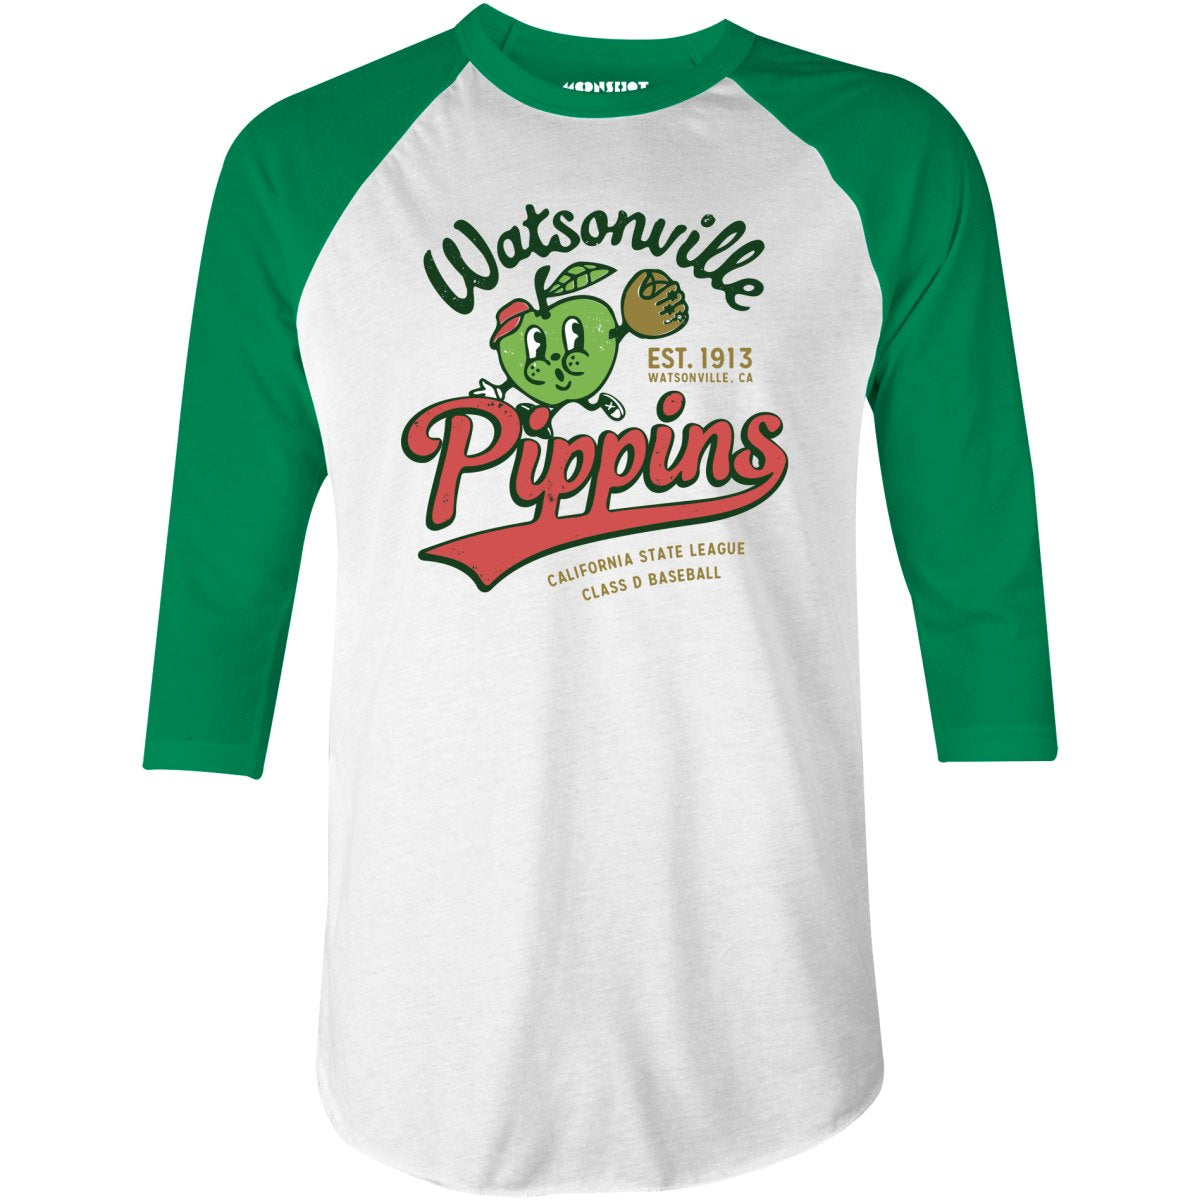 Watsonville Pippins - California - Vintage Defunct Baseball Teams - 3/4 Sleeve Raglan T-Shirt